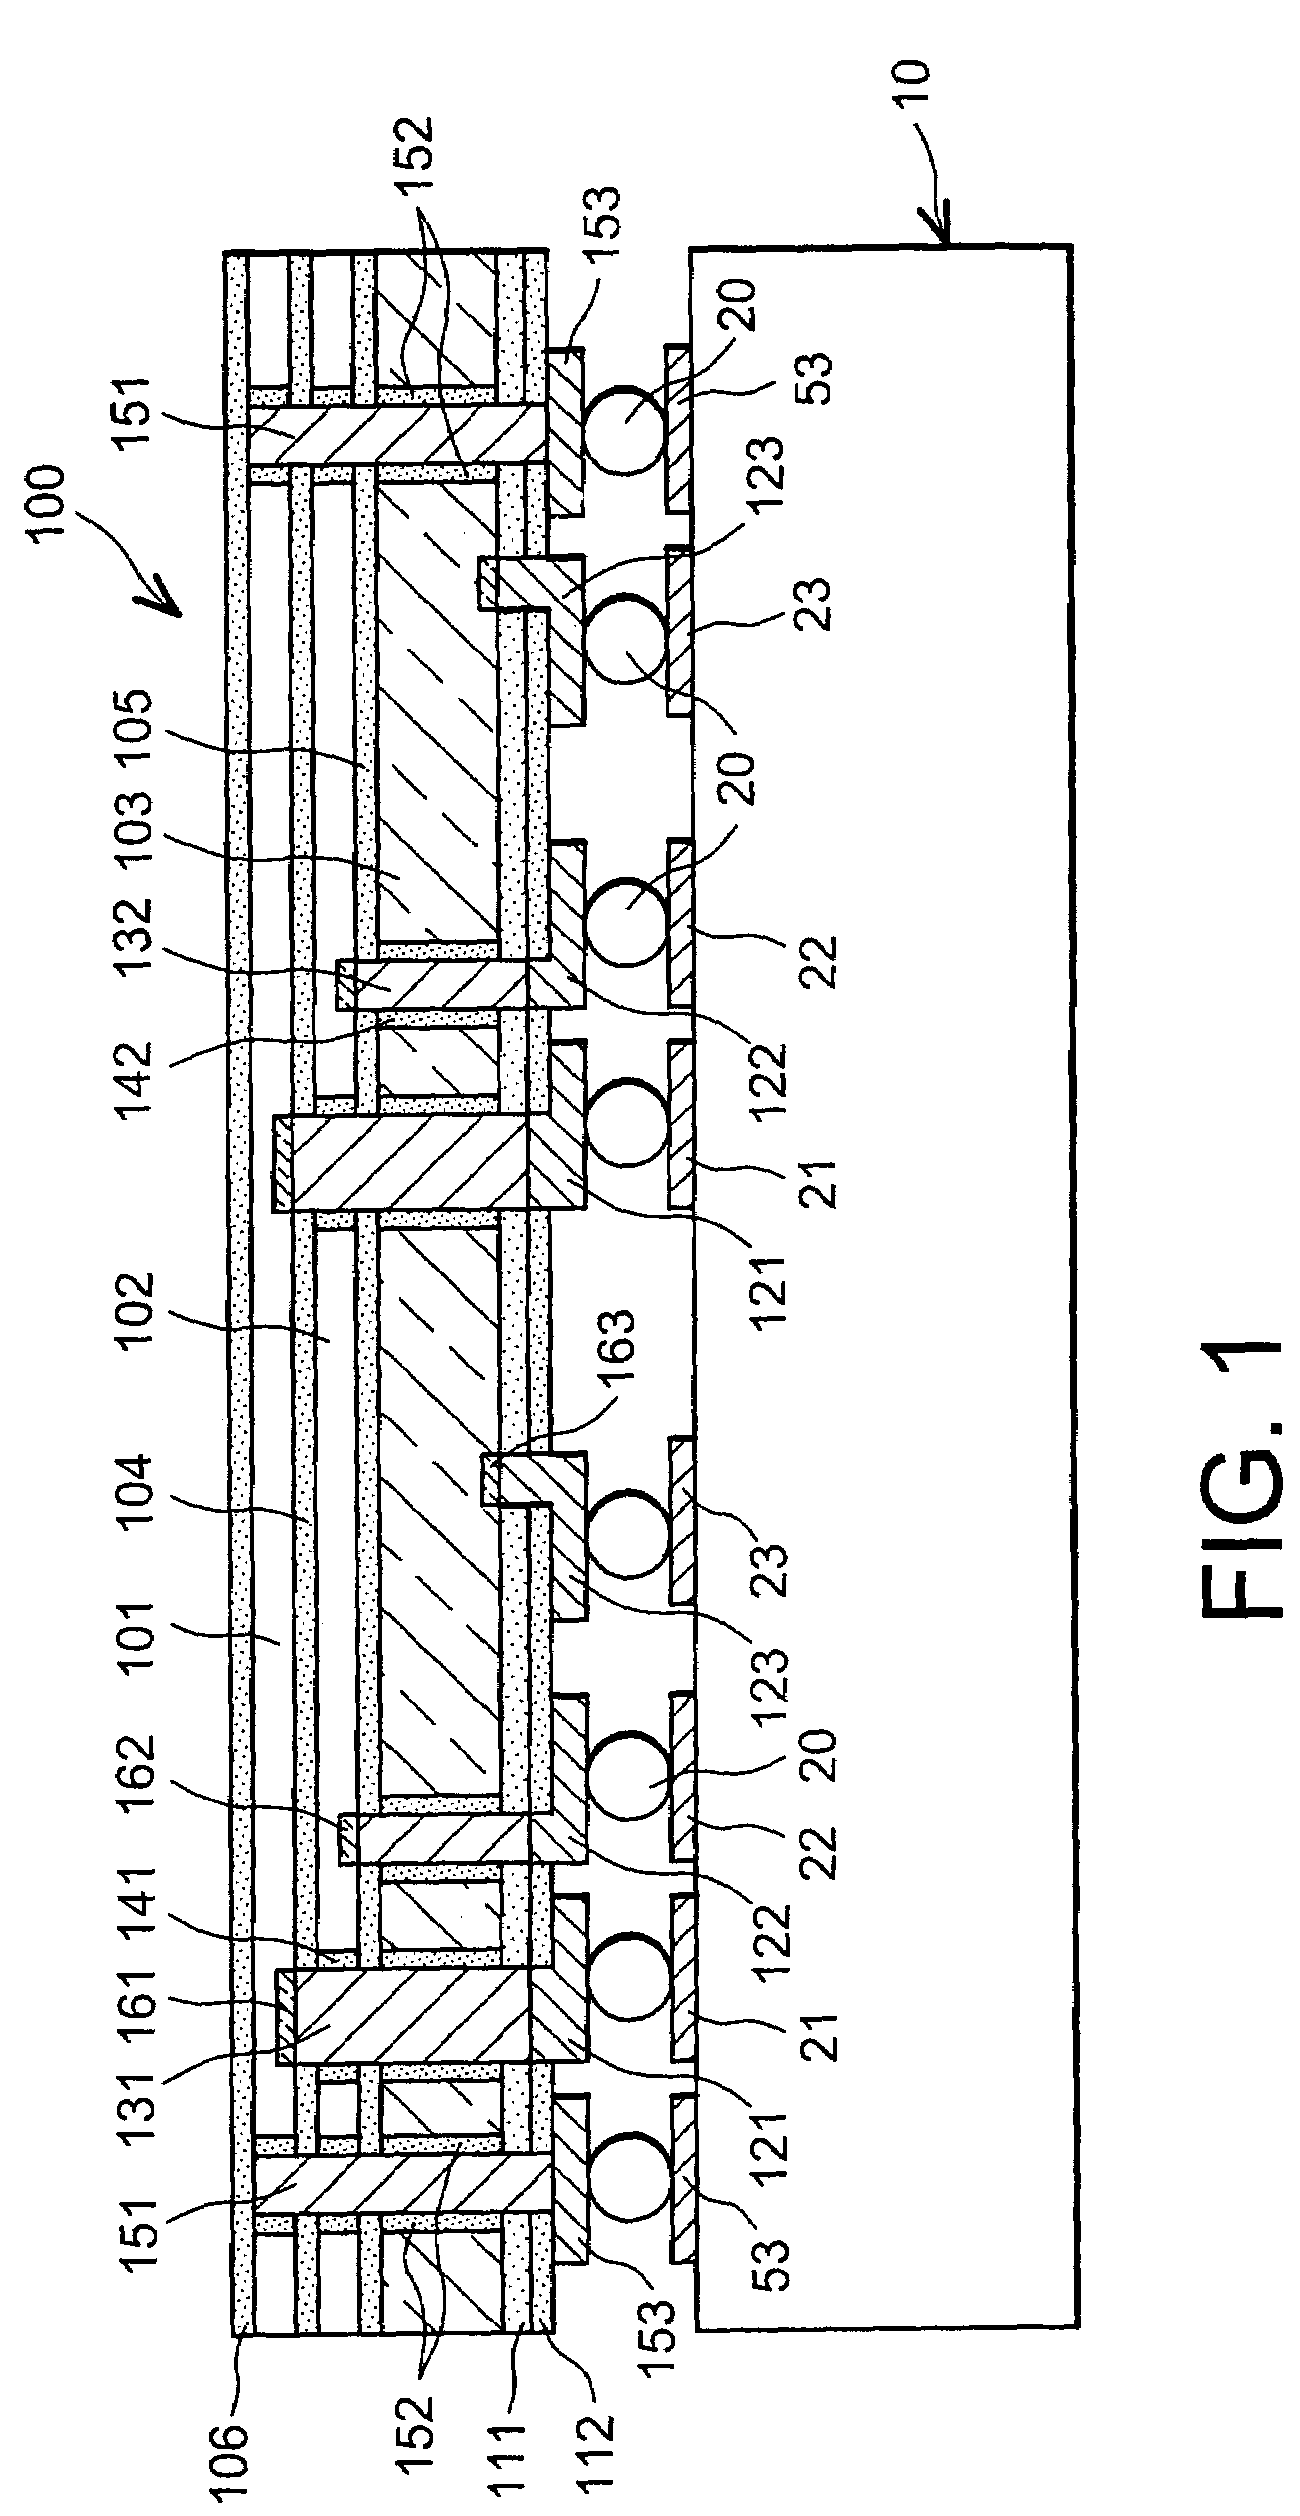 Multispectral detector matrix